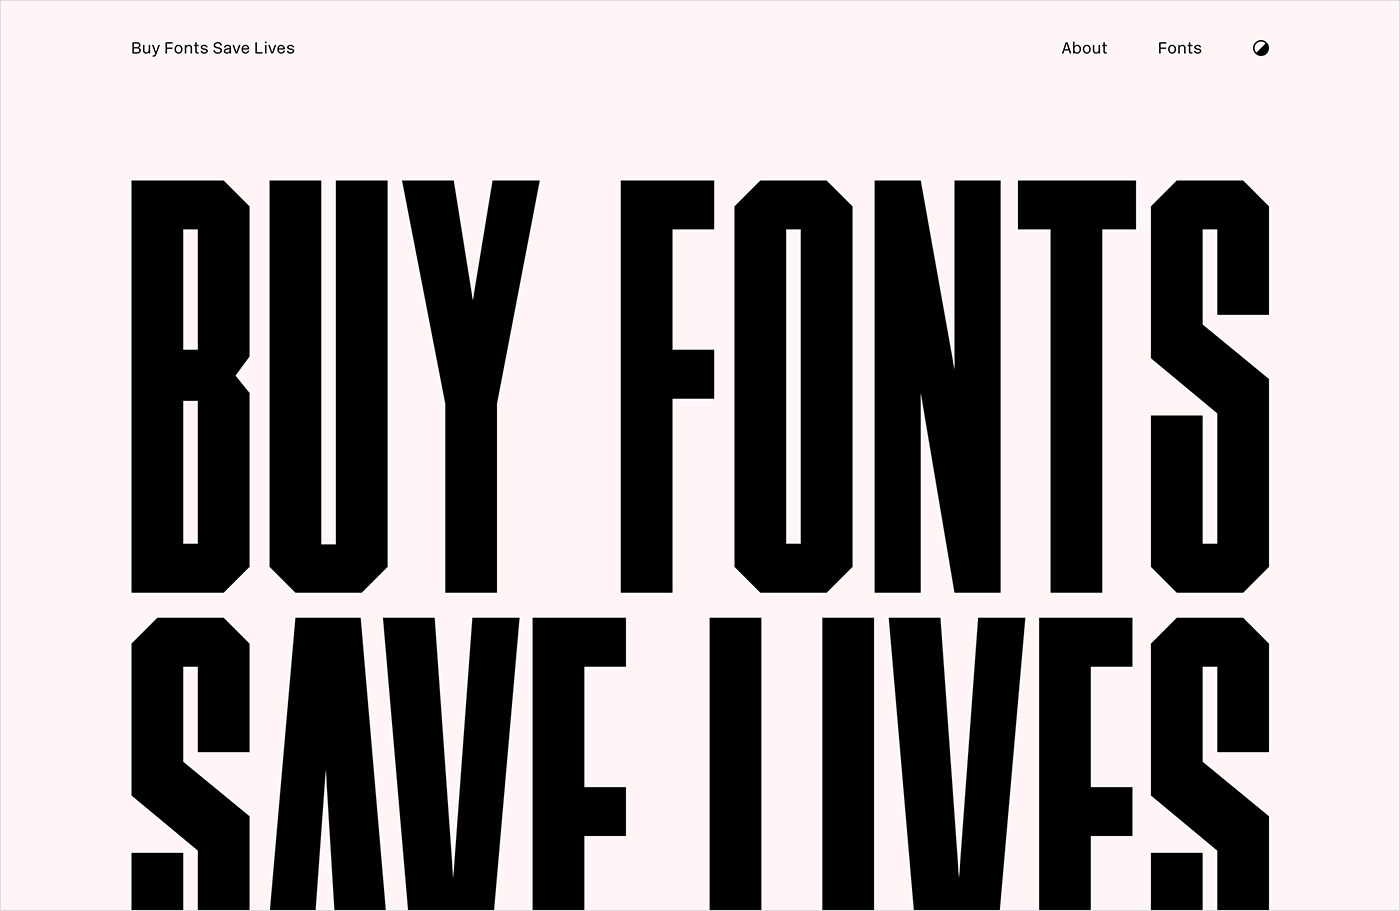 Buy Fonts Save Livesウェブサイトの画面キャプチャ画像